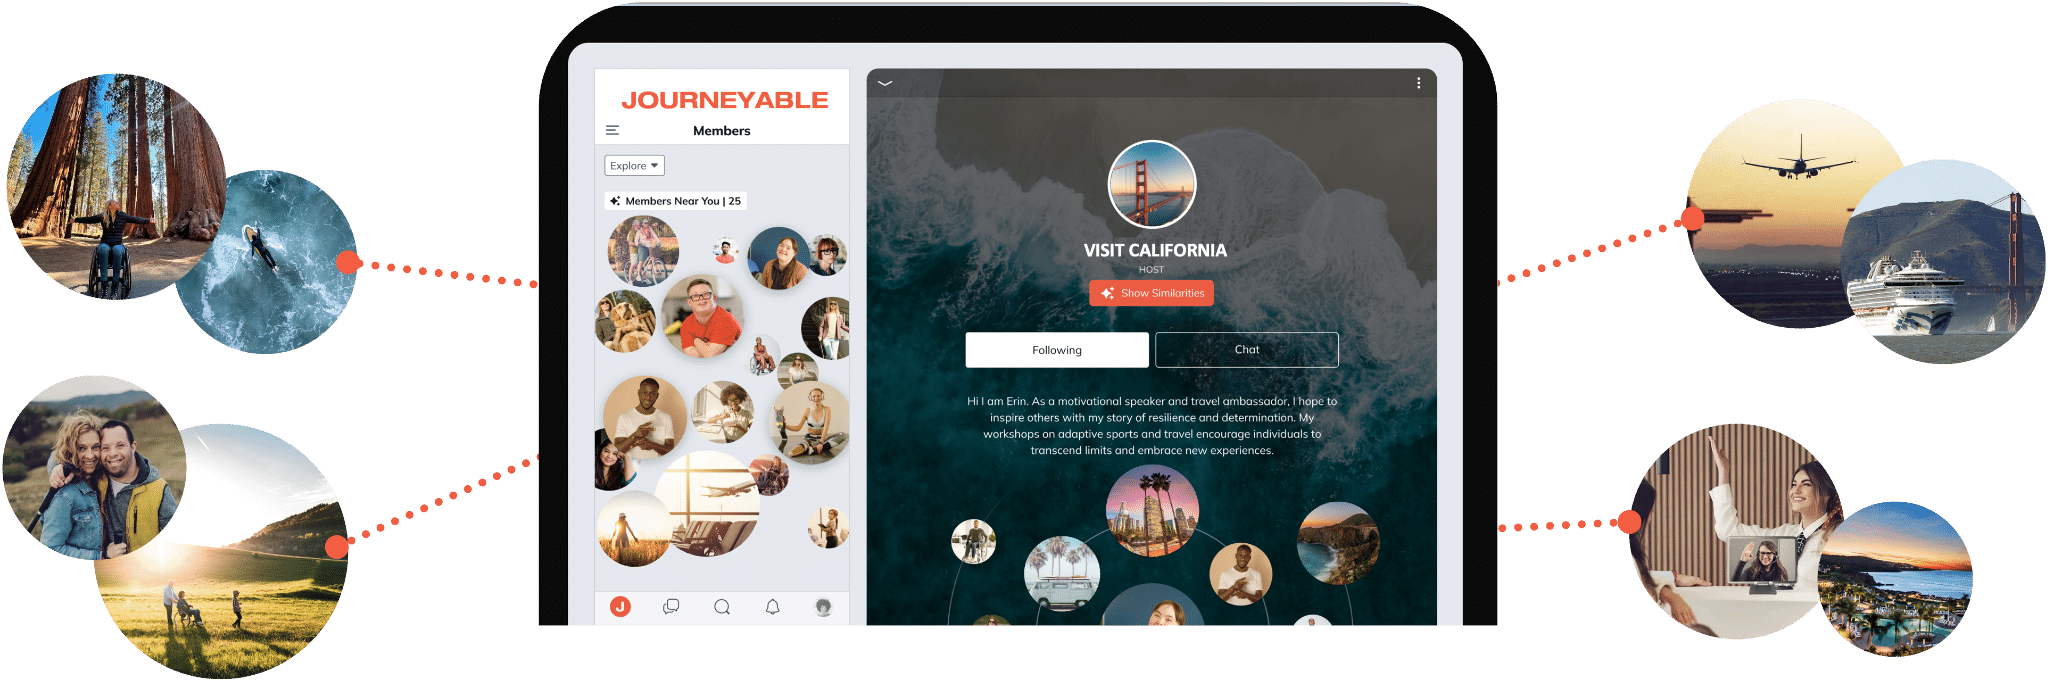 Visit California profile inside Journeyable on a ipad